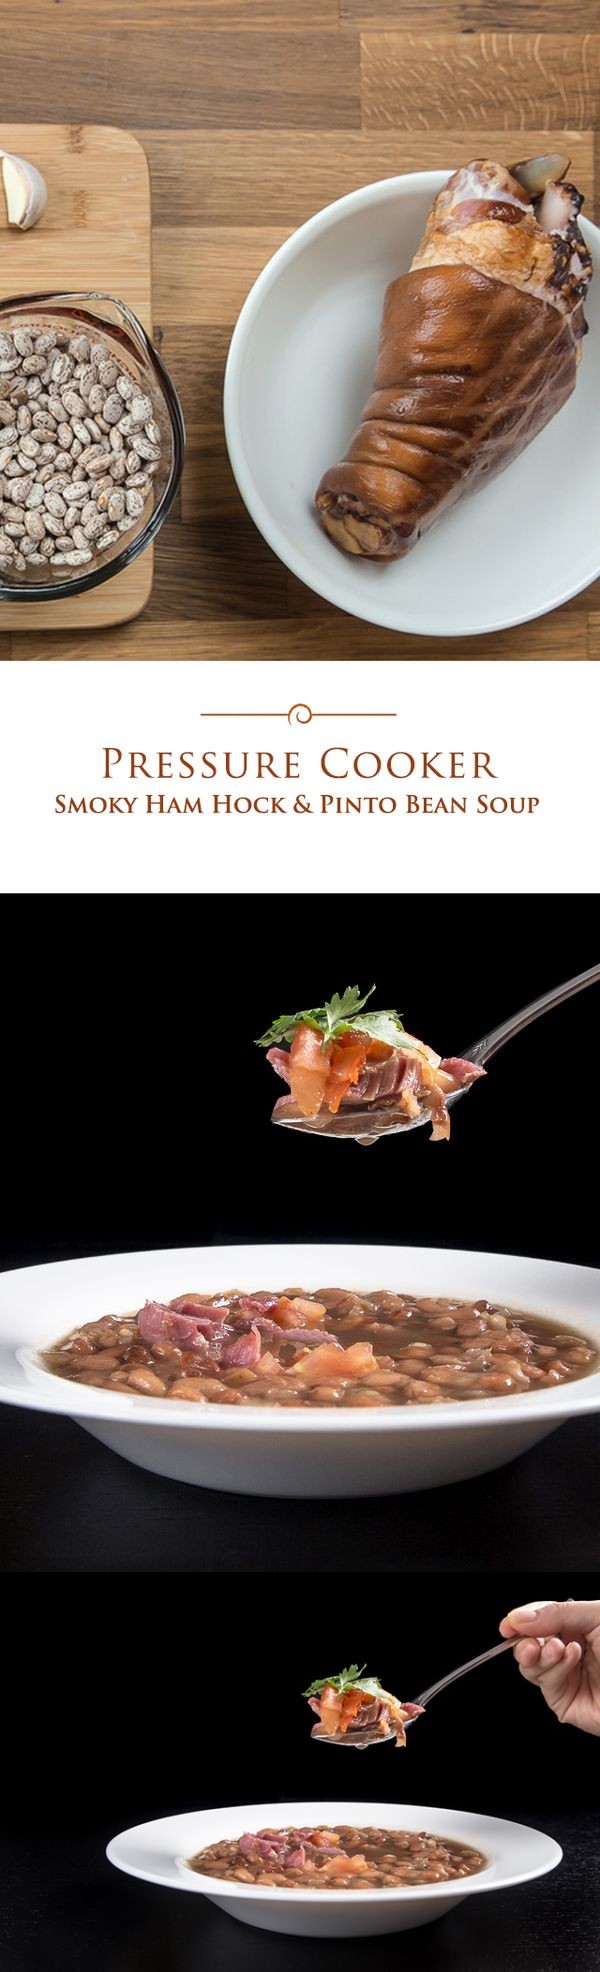 Pressure Cooker Smoky Ham Hock & Pinto Bean Soup